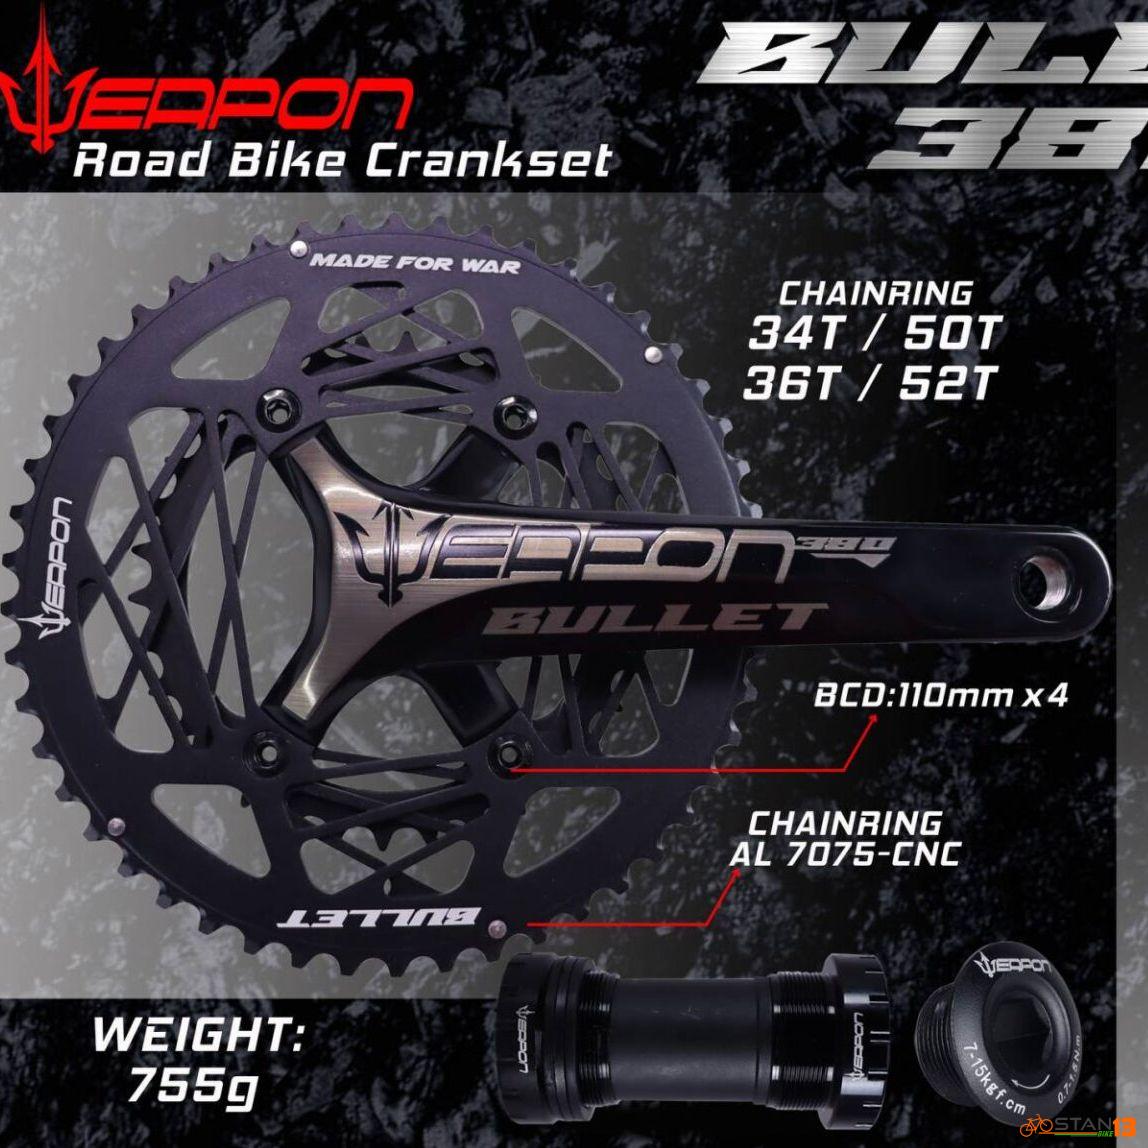 Crank Weapon Bullet 380 Alloy Road Bike Crank Set with BB